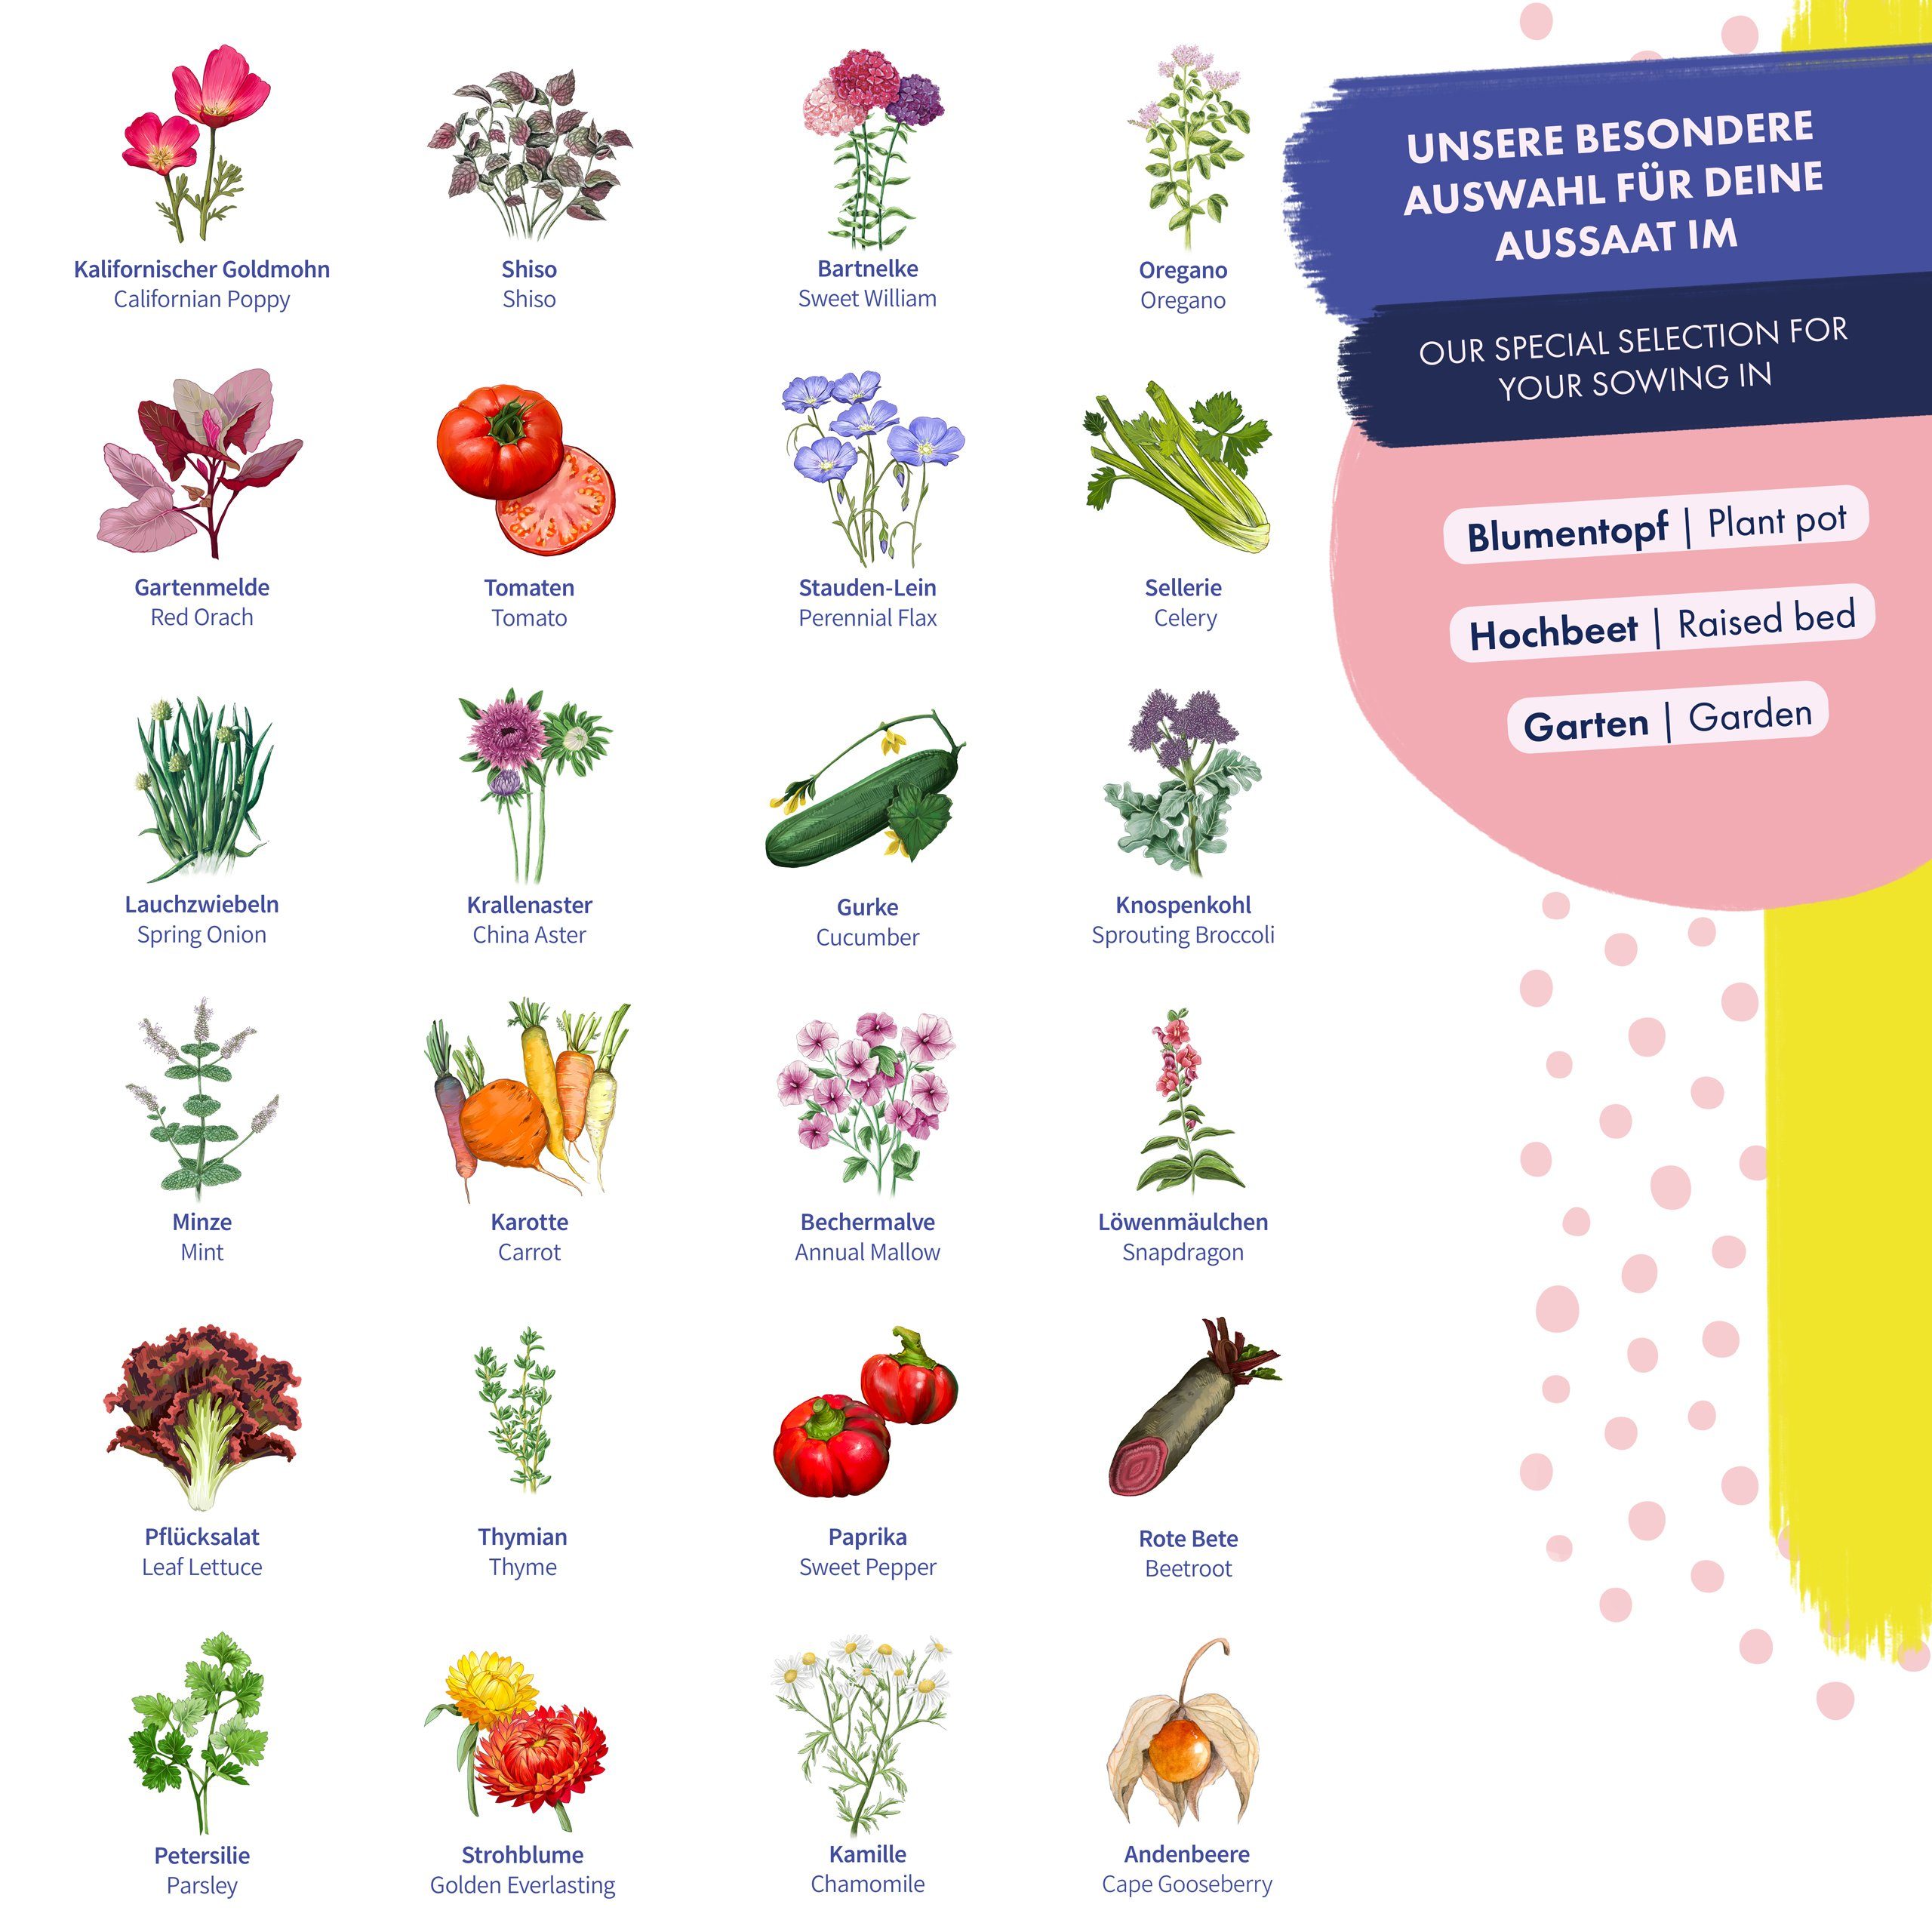 & Tütchen Gemüse, Seeds Adventskalender Blumen-Samen Magic Saatgut-Adventskalender Kräuter - 24 Garden -